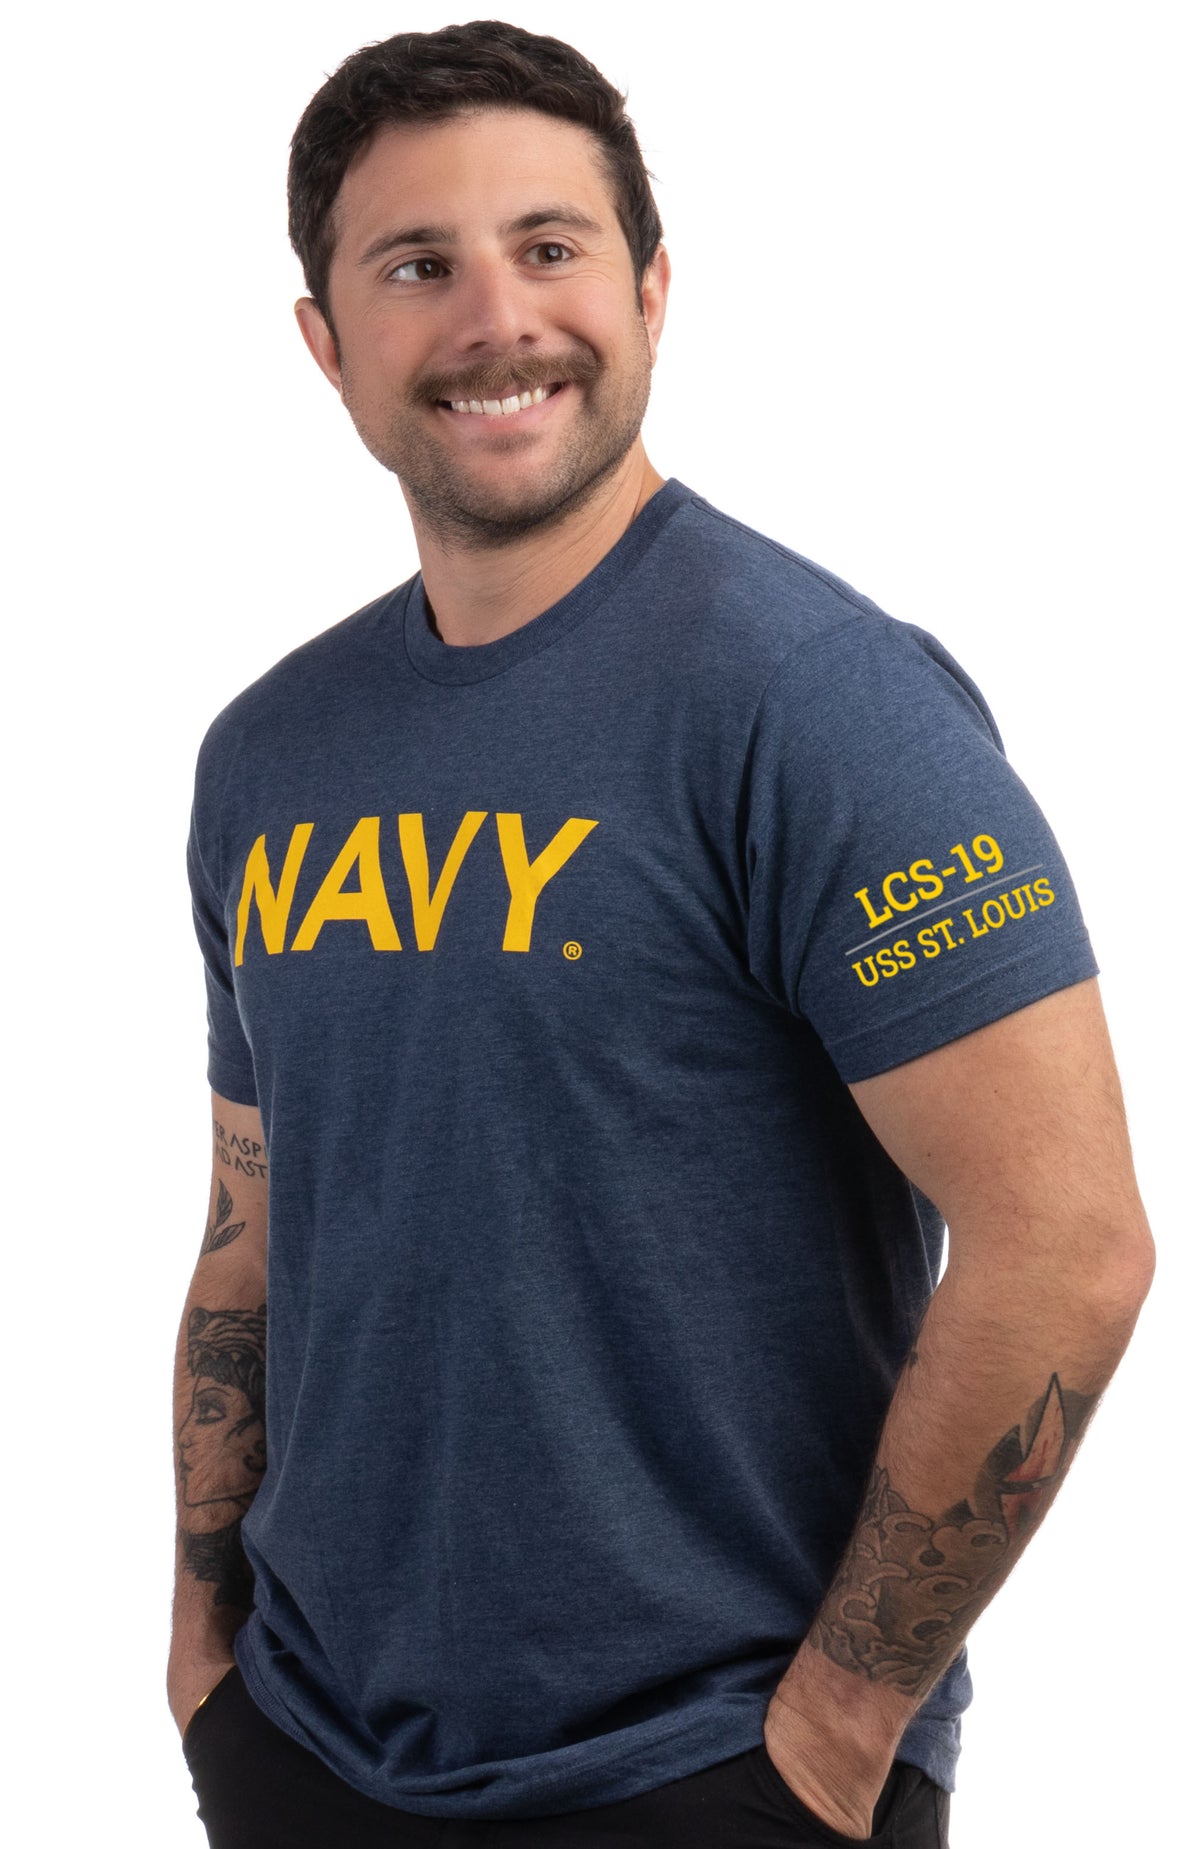 USS St. Louis, LCS-19 | U.S. Navy Sailor Veteran USN United States Naval T-shirt for Men Women